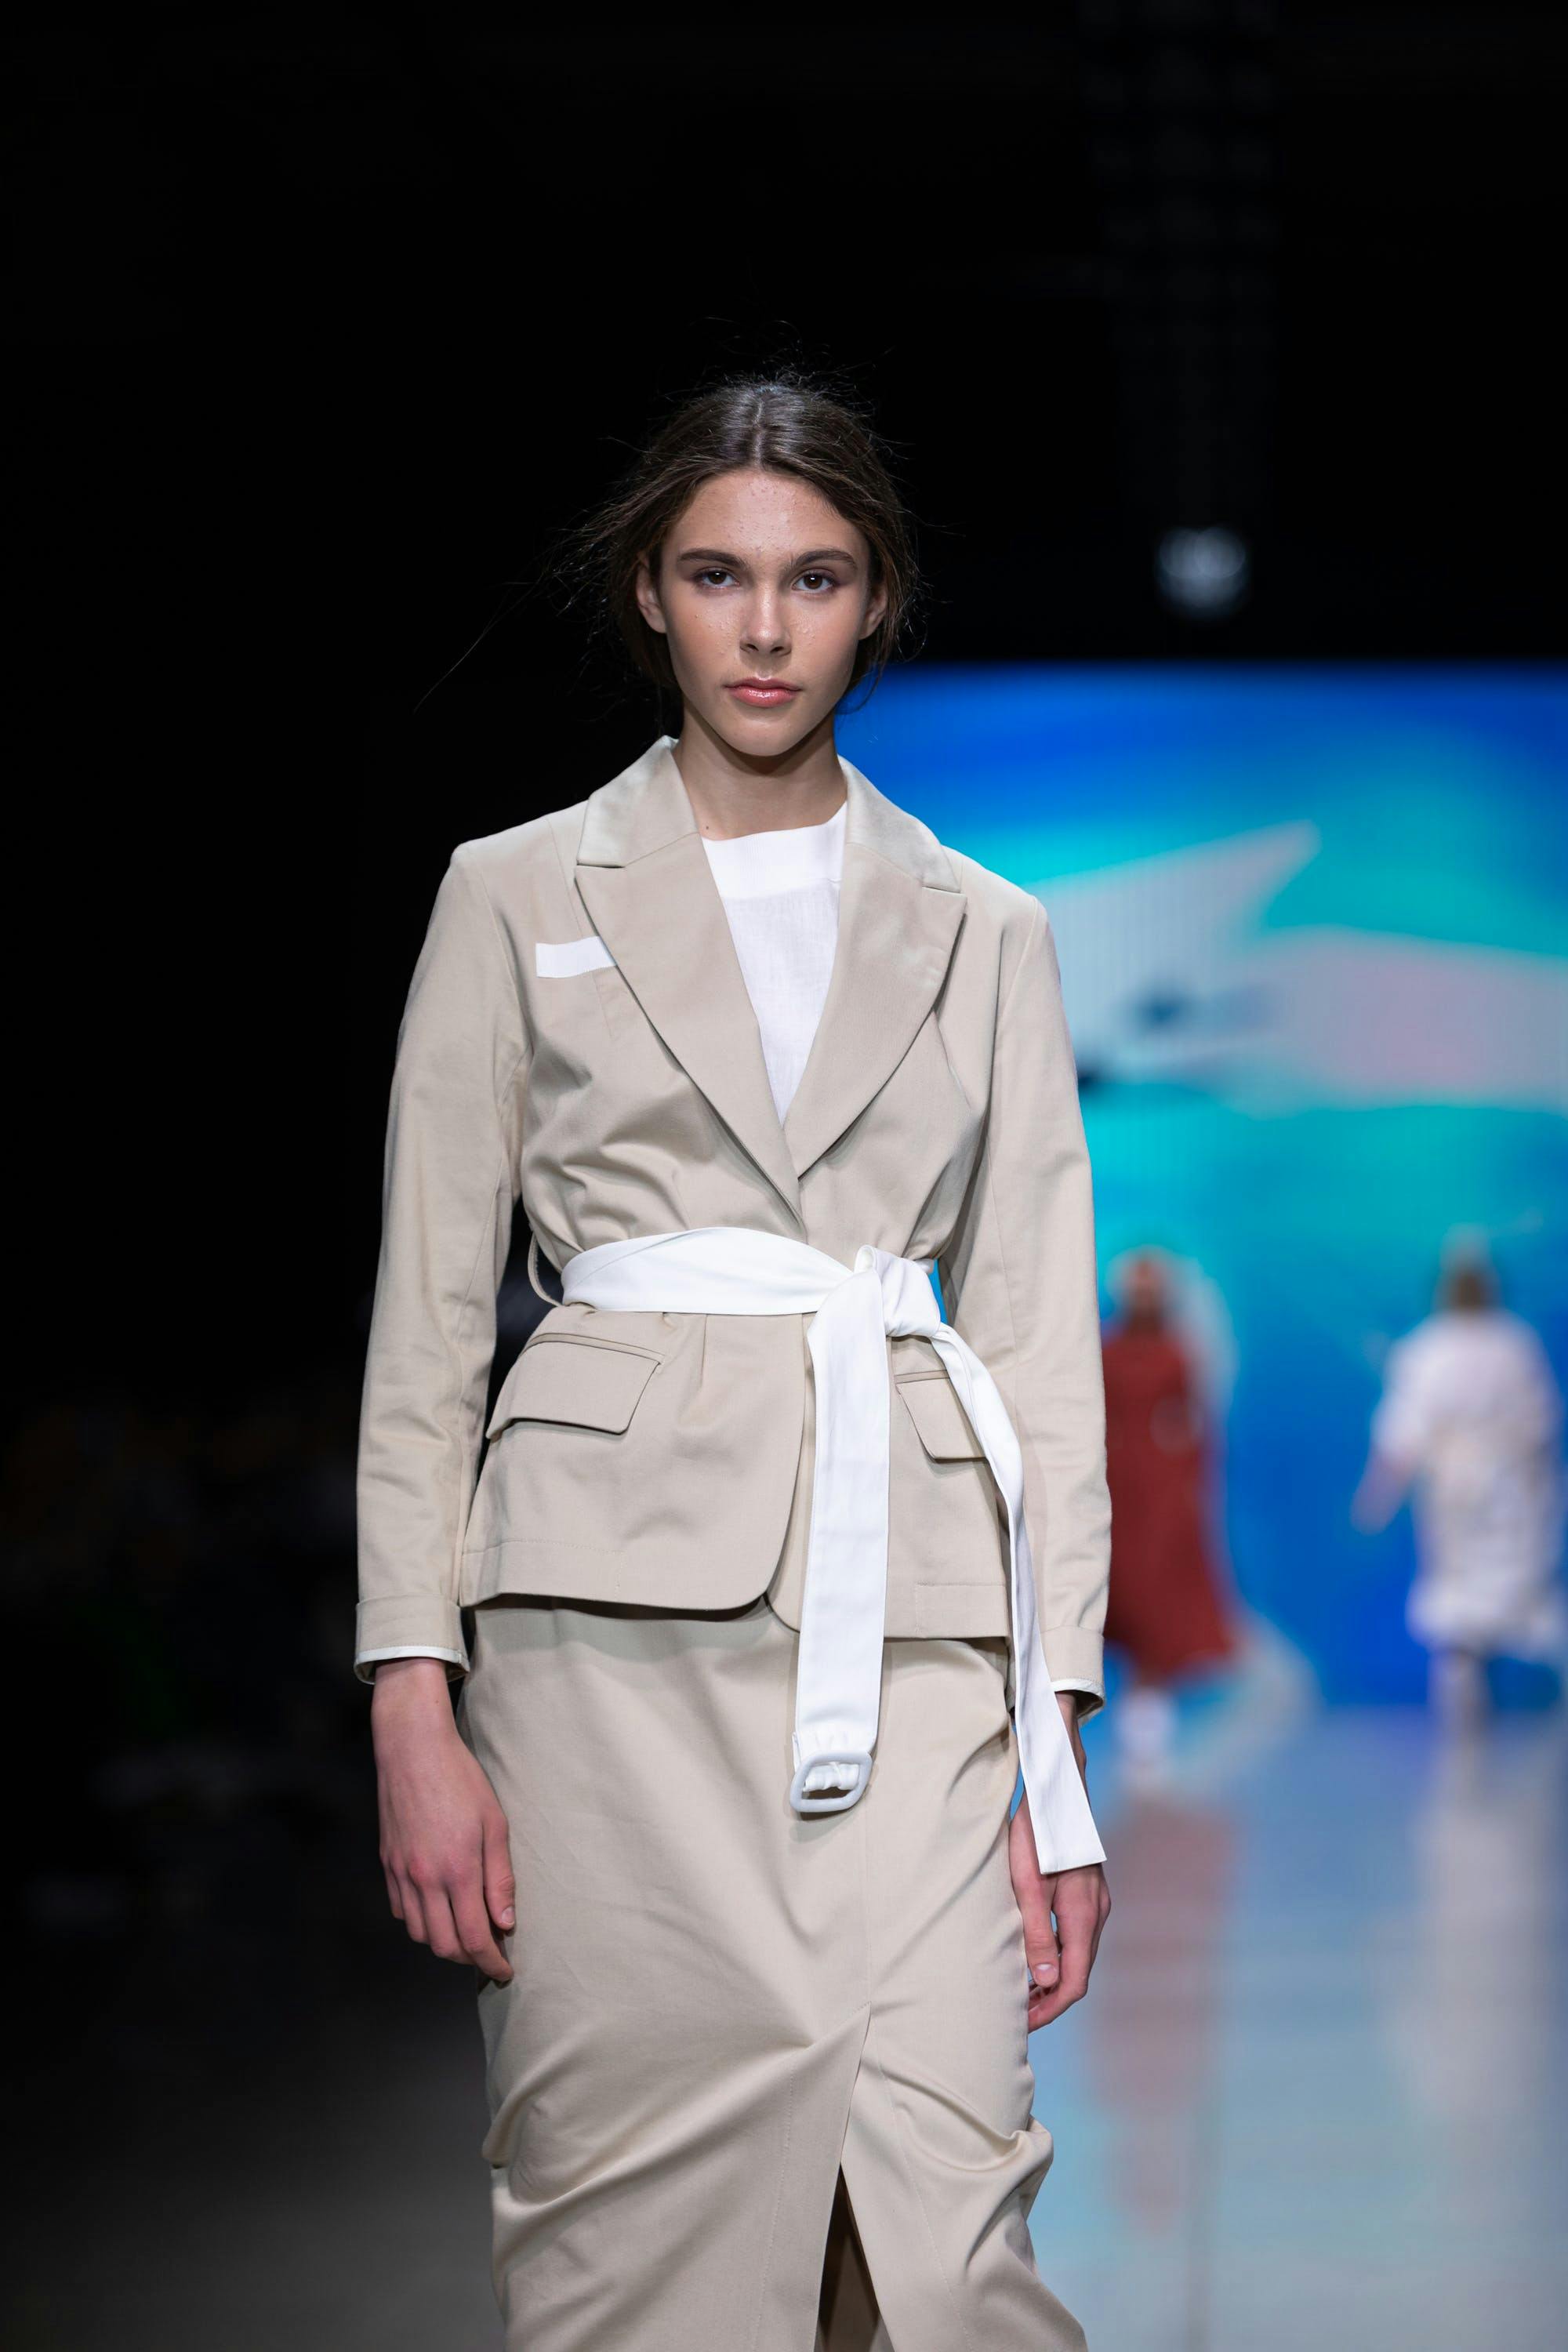 clothing apparel person human overcoat coat fashion